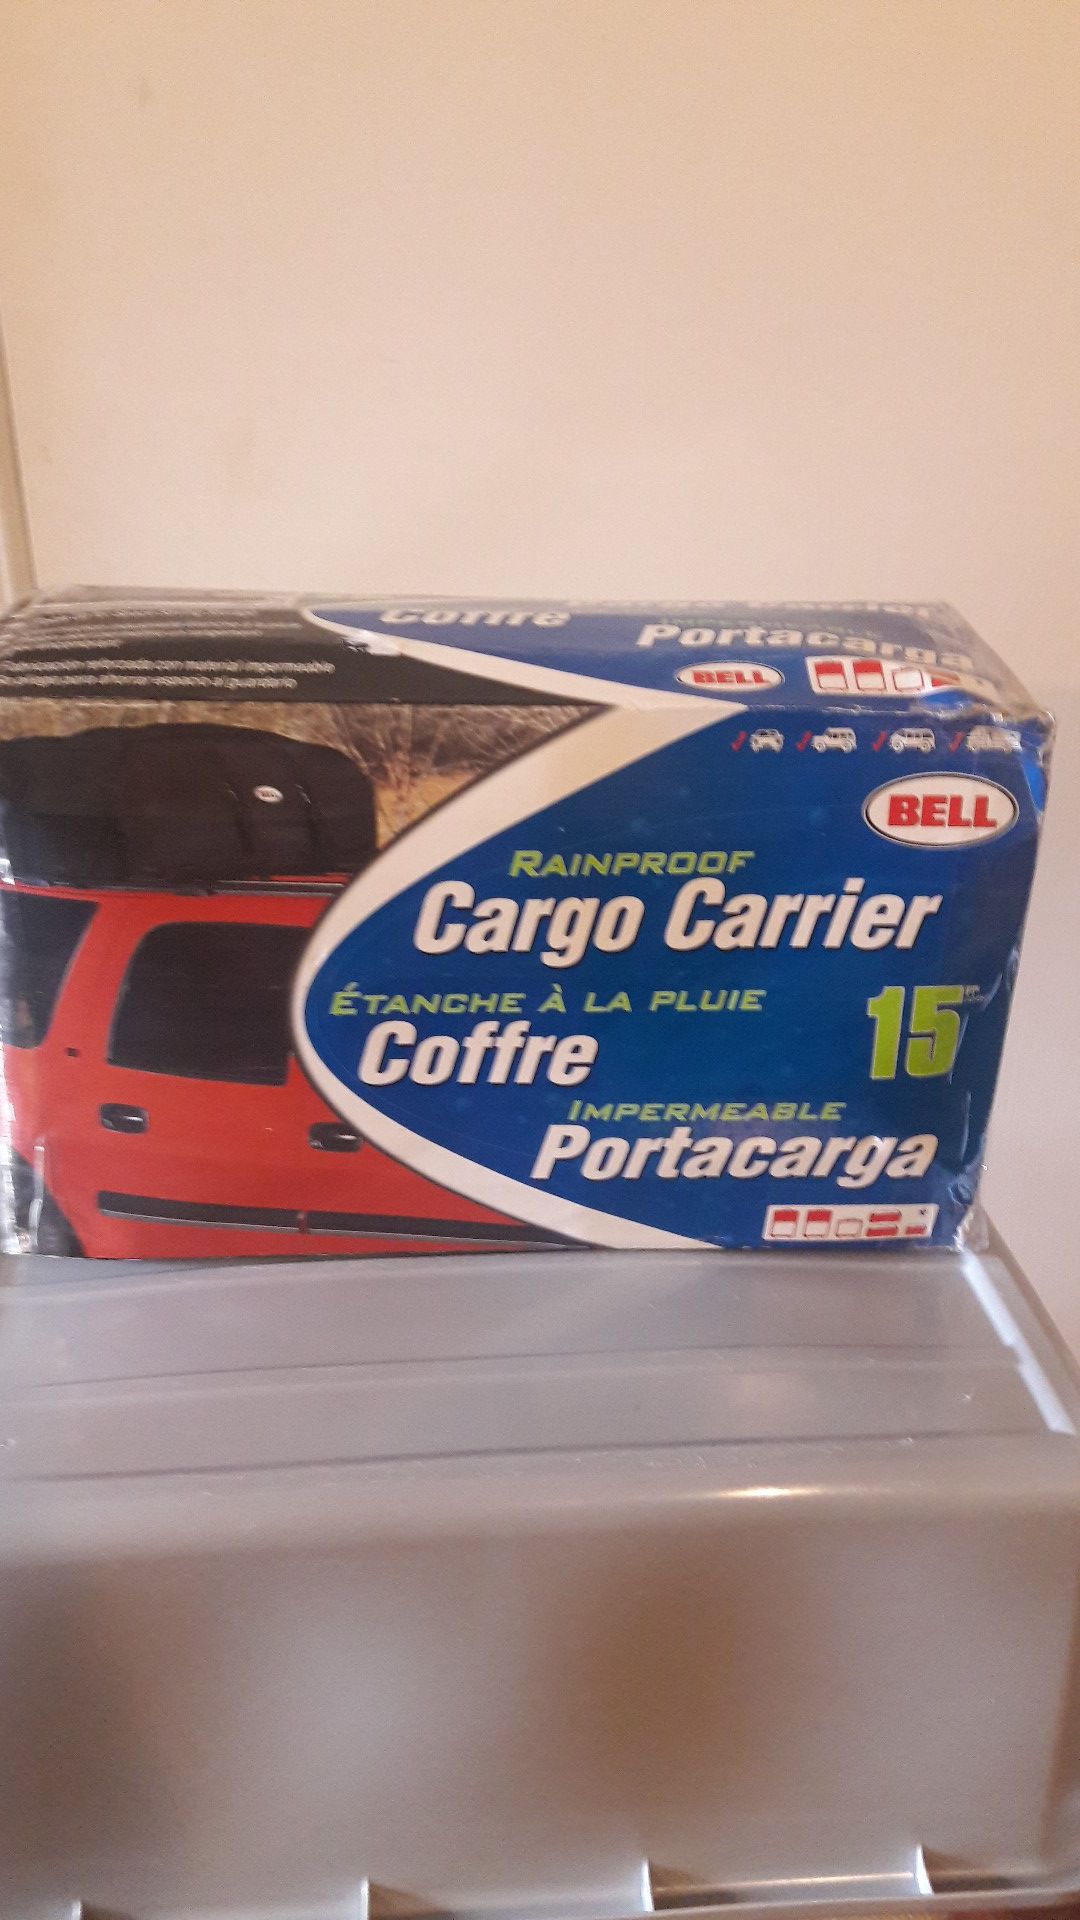 Rainproof Cargo Carrier